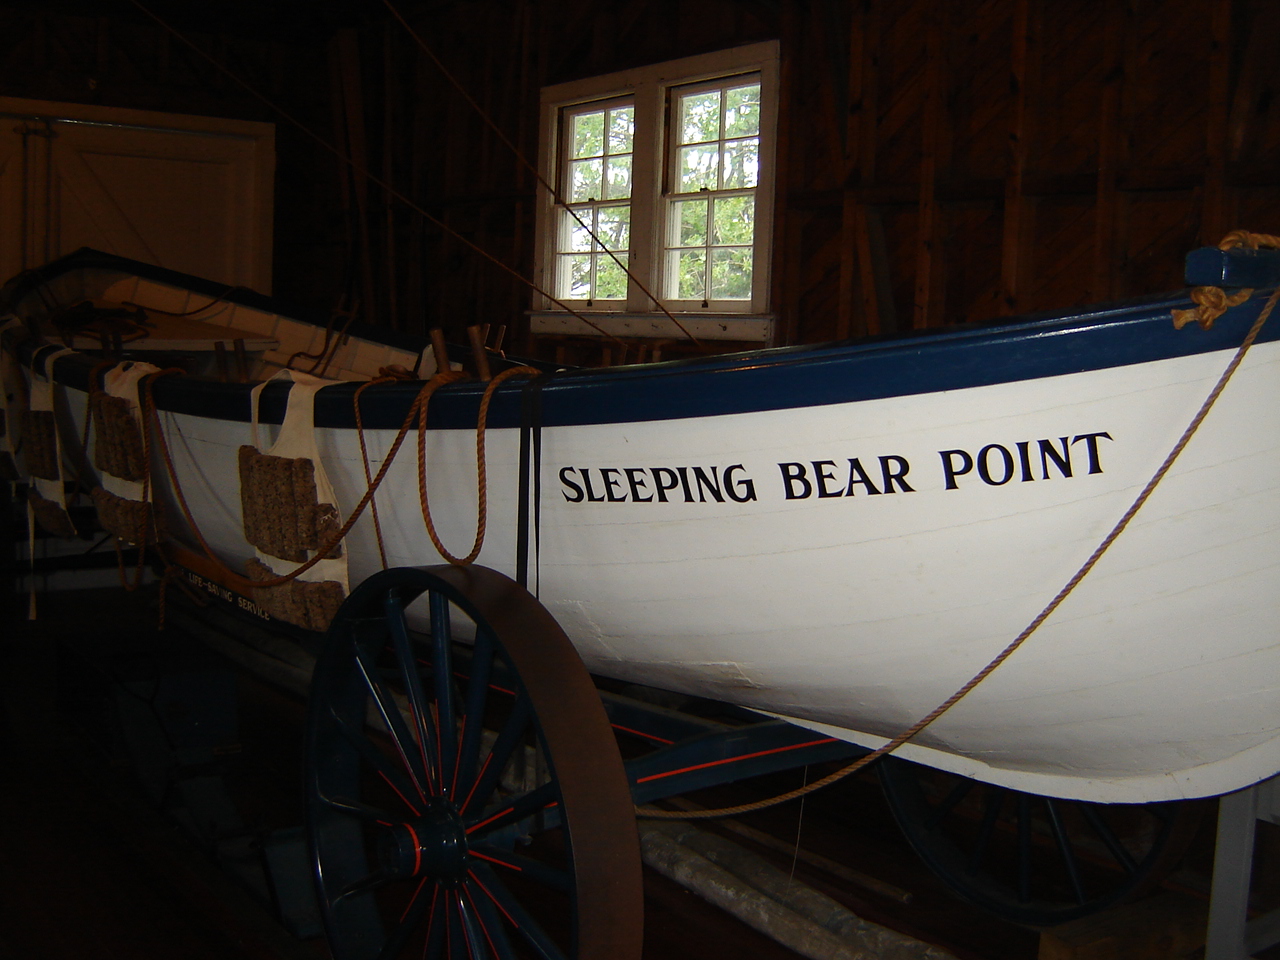 A lifeboat on display at the Sleeping Bear Point Coastguard Station